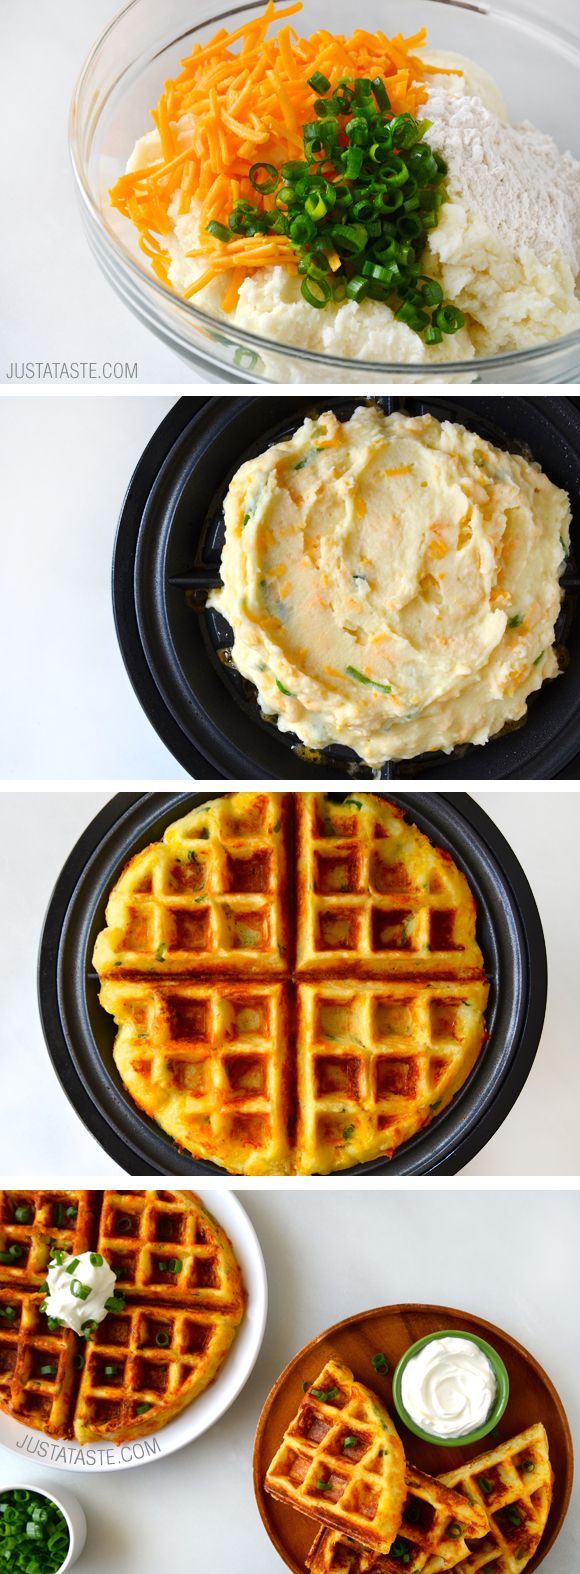 Cheesy Leftover Mashed Potato Waffles #recipe from justataste.com